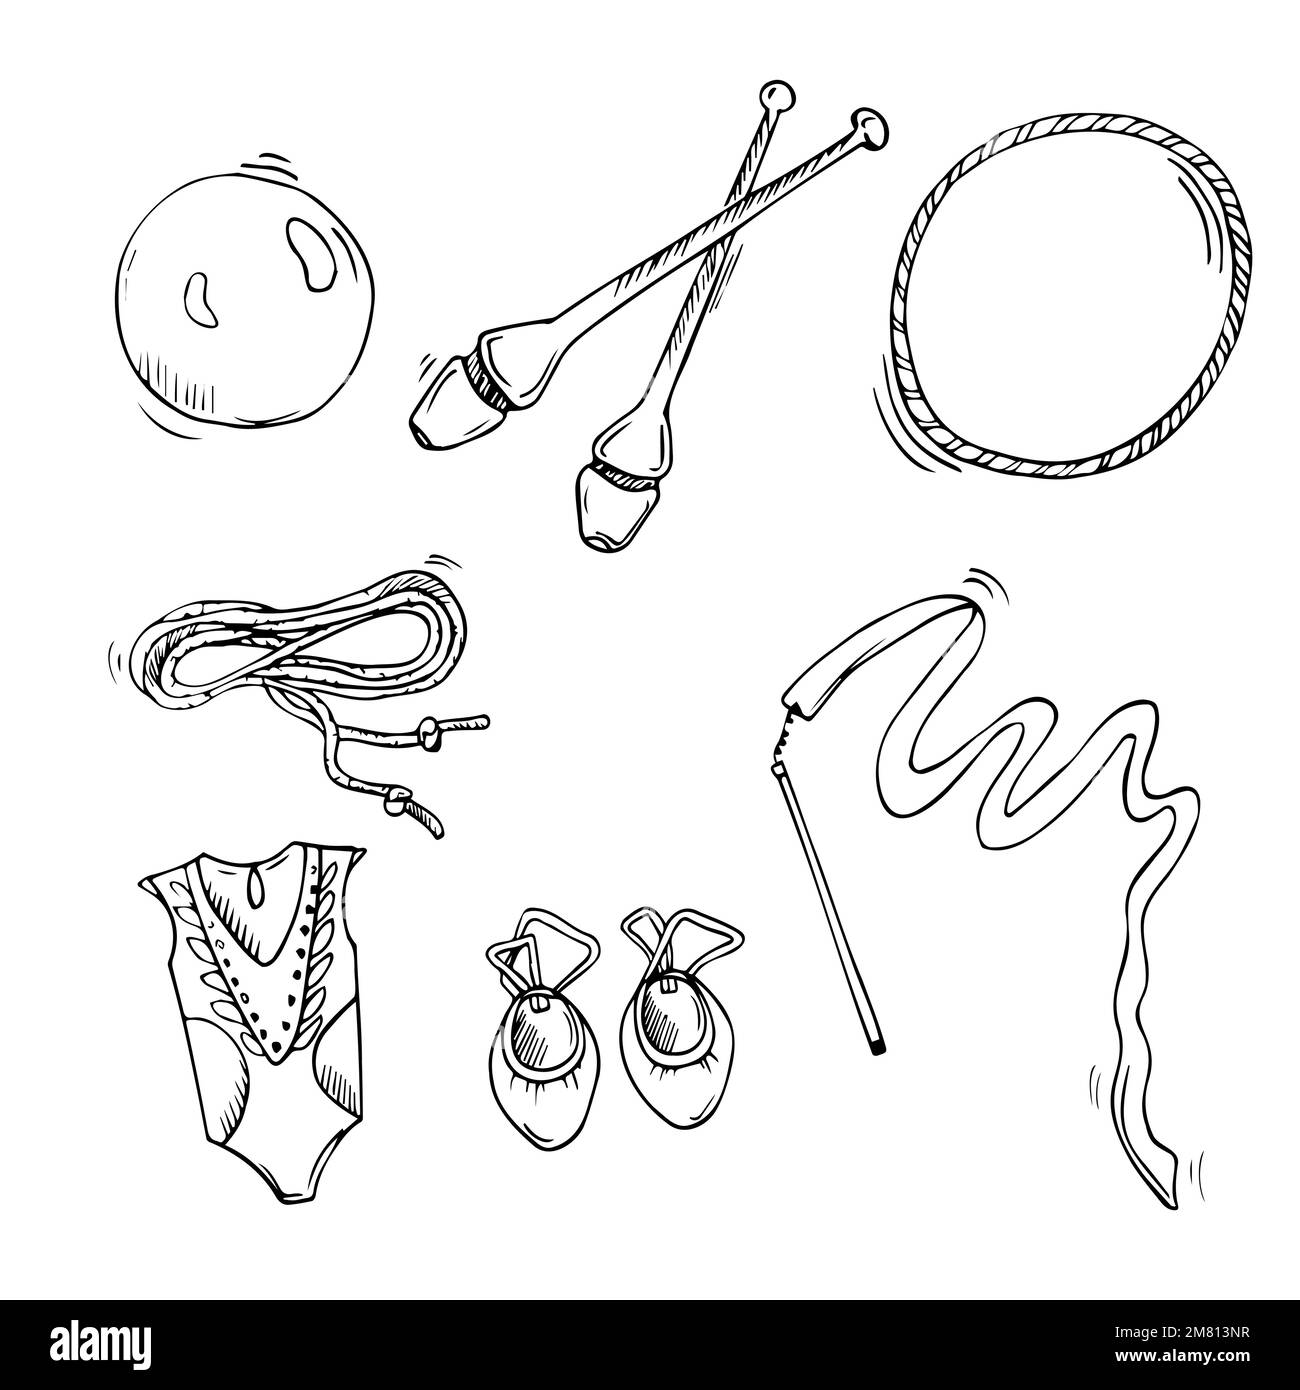 https://c8.alamy.com/comp/2M813NR/vector-doodle-rhythmic-gymnastics-equipment-set-sportwear-halfshoes-clubs-hoops-ribbon-ball-isolated-vector-2M813NR.jpg